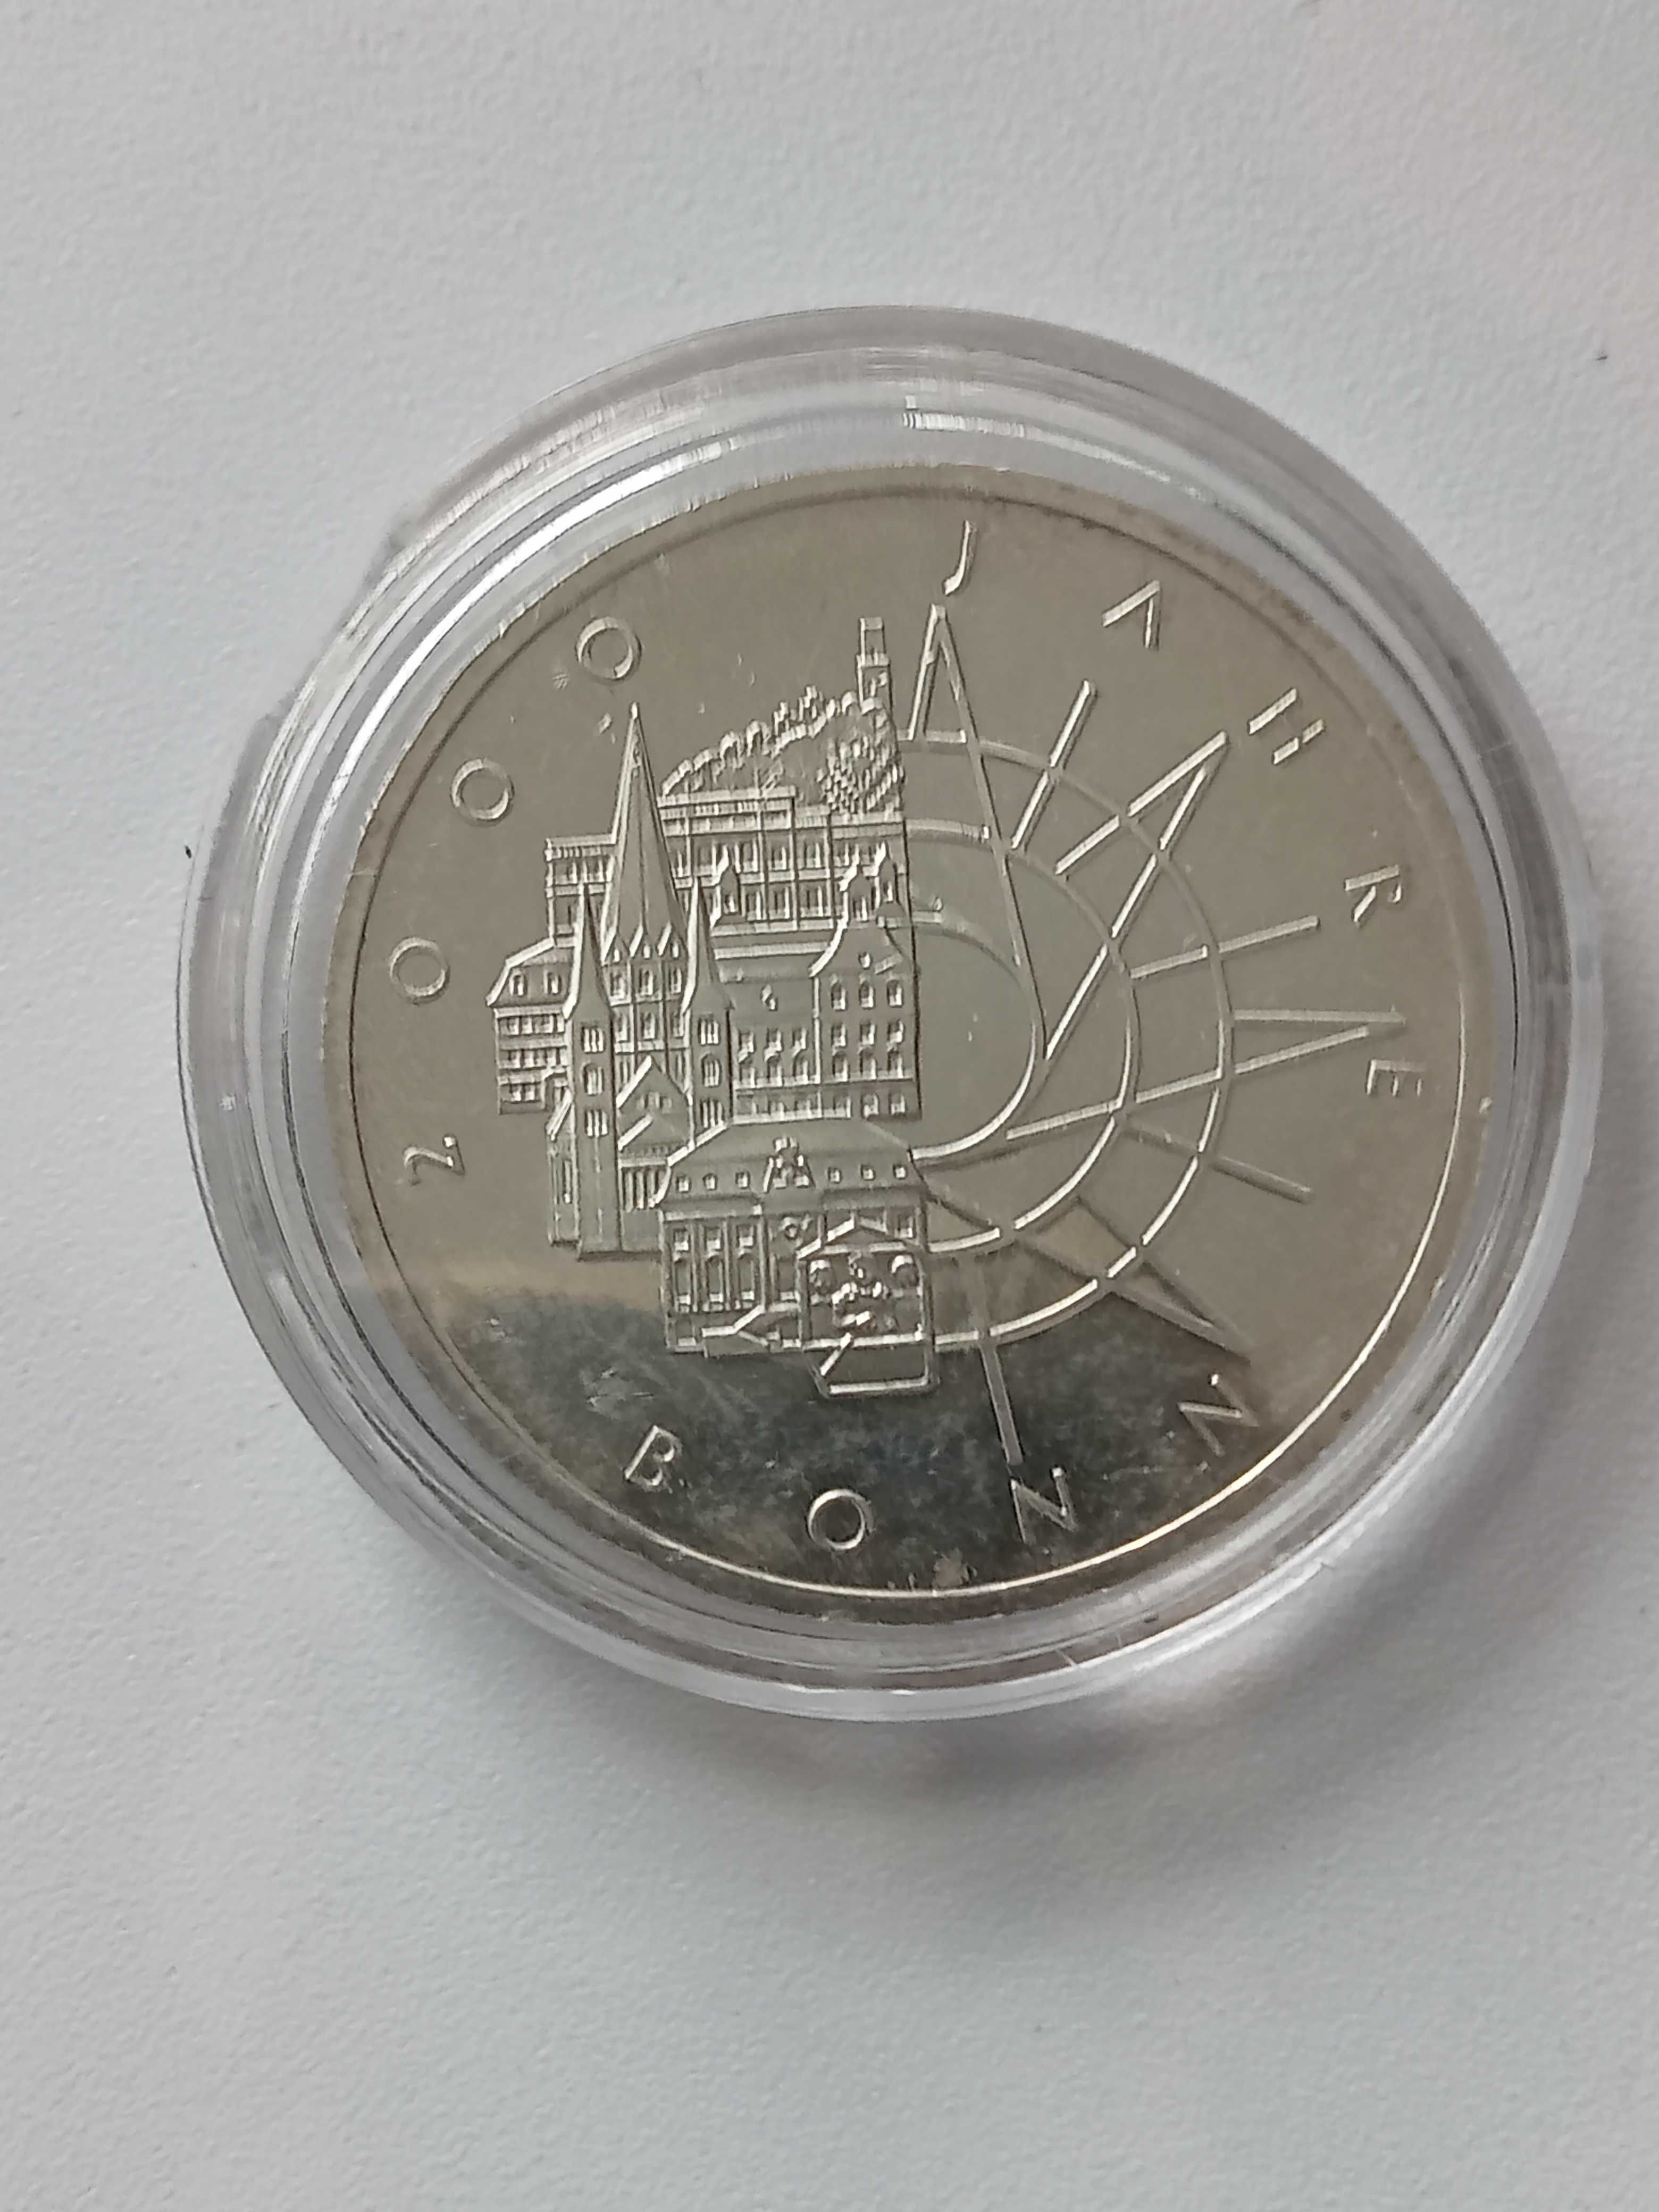 Moneta 10 marek Niemiecy 1989 r 2000 lat Bonn